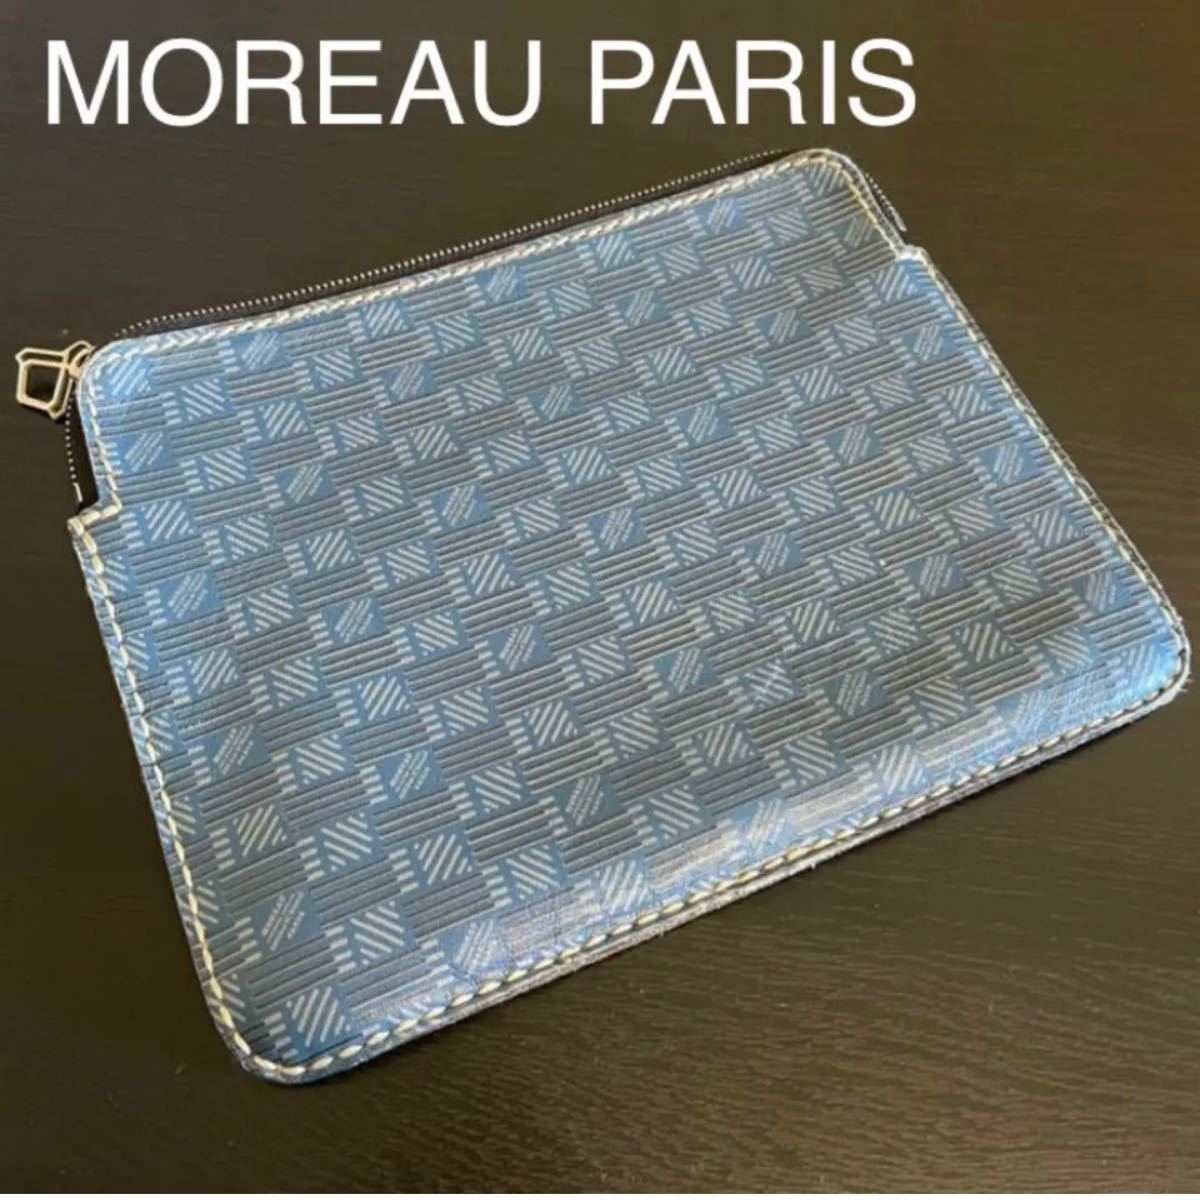 MOREAU PARIS モロー・パリ フラット ポーチ クラッチバッグ 1